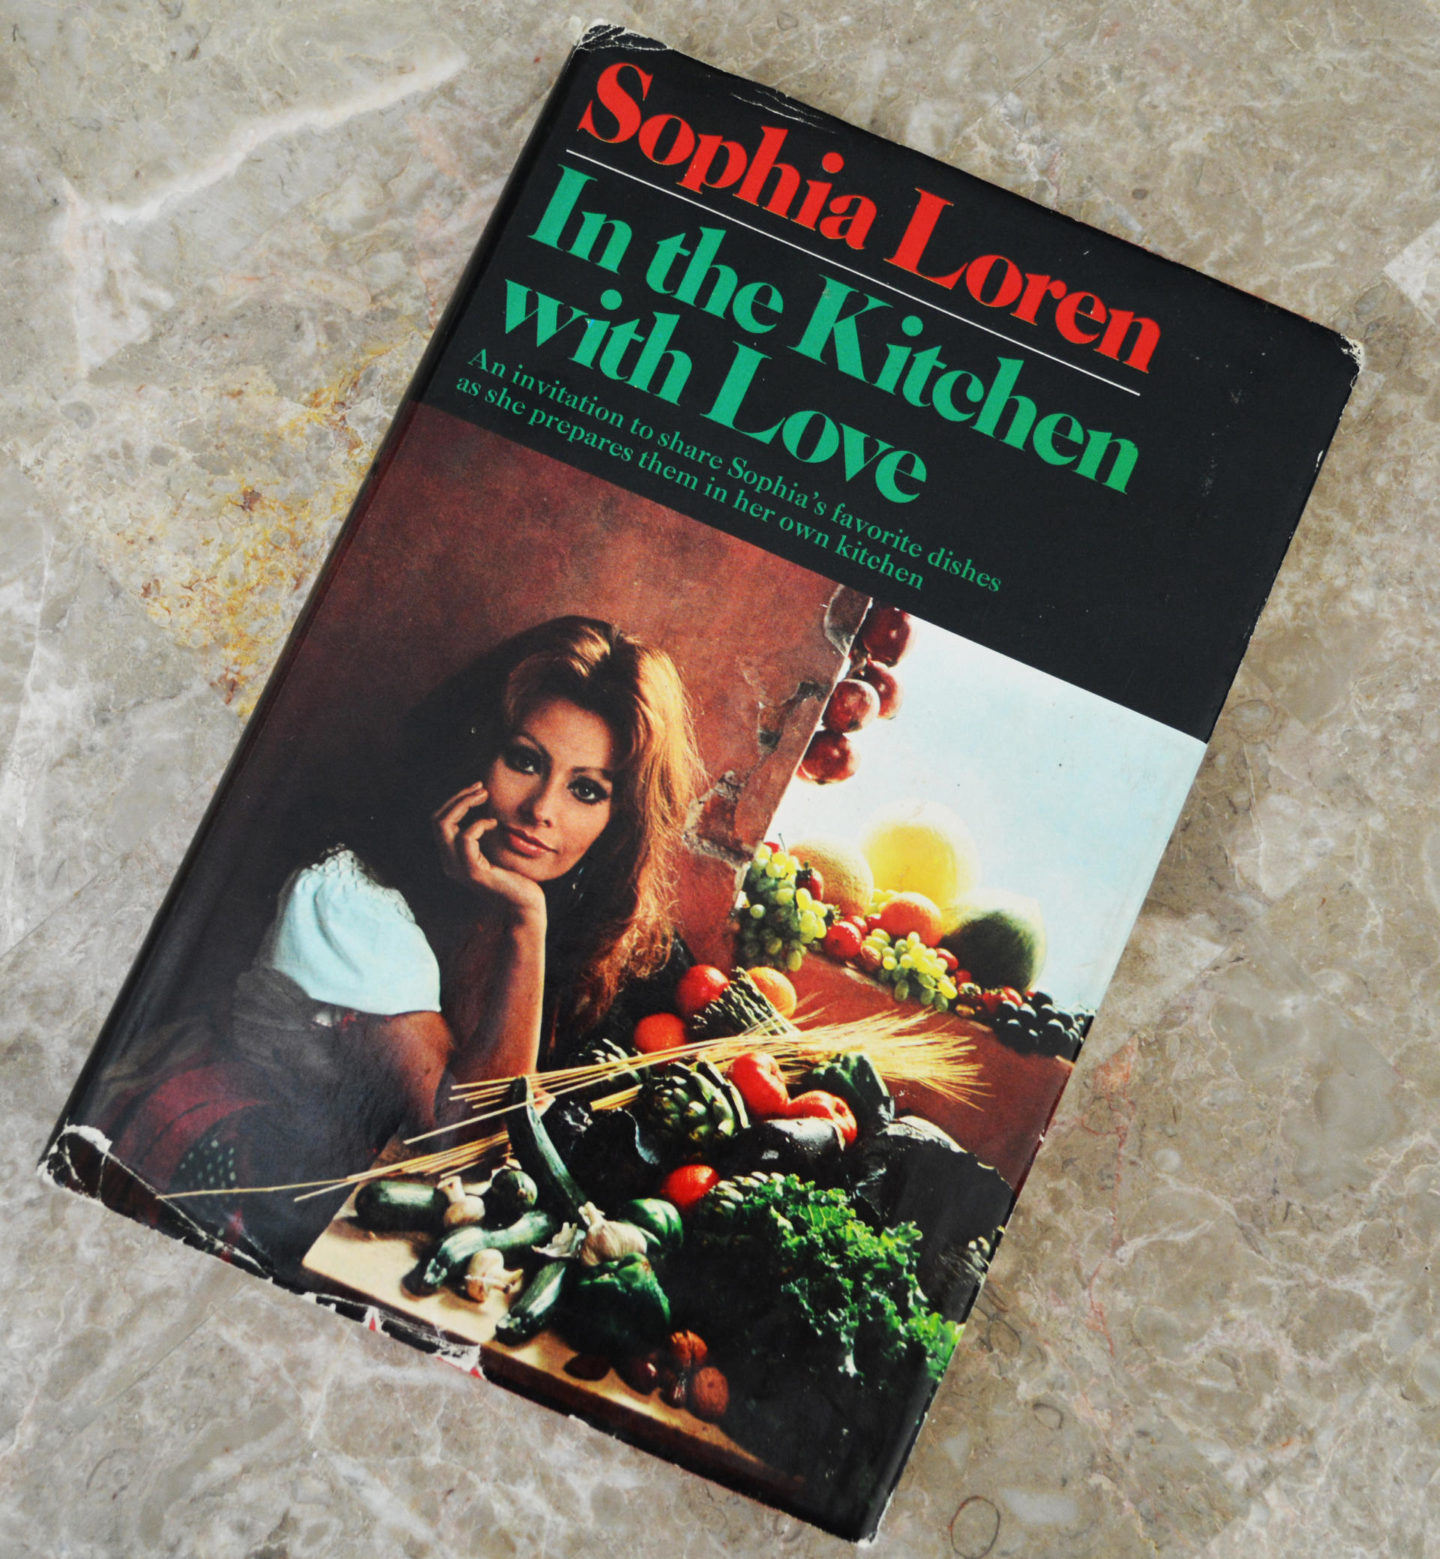 Sophia Loren in the Kitchen with Love